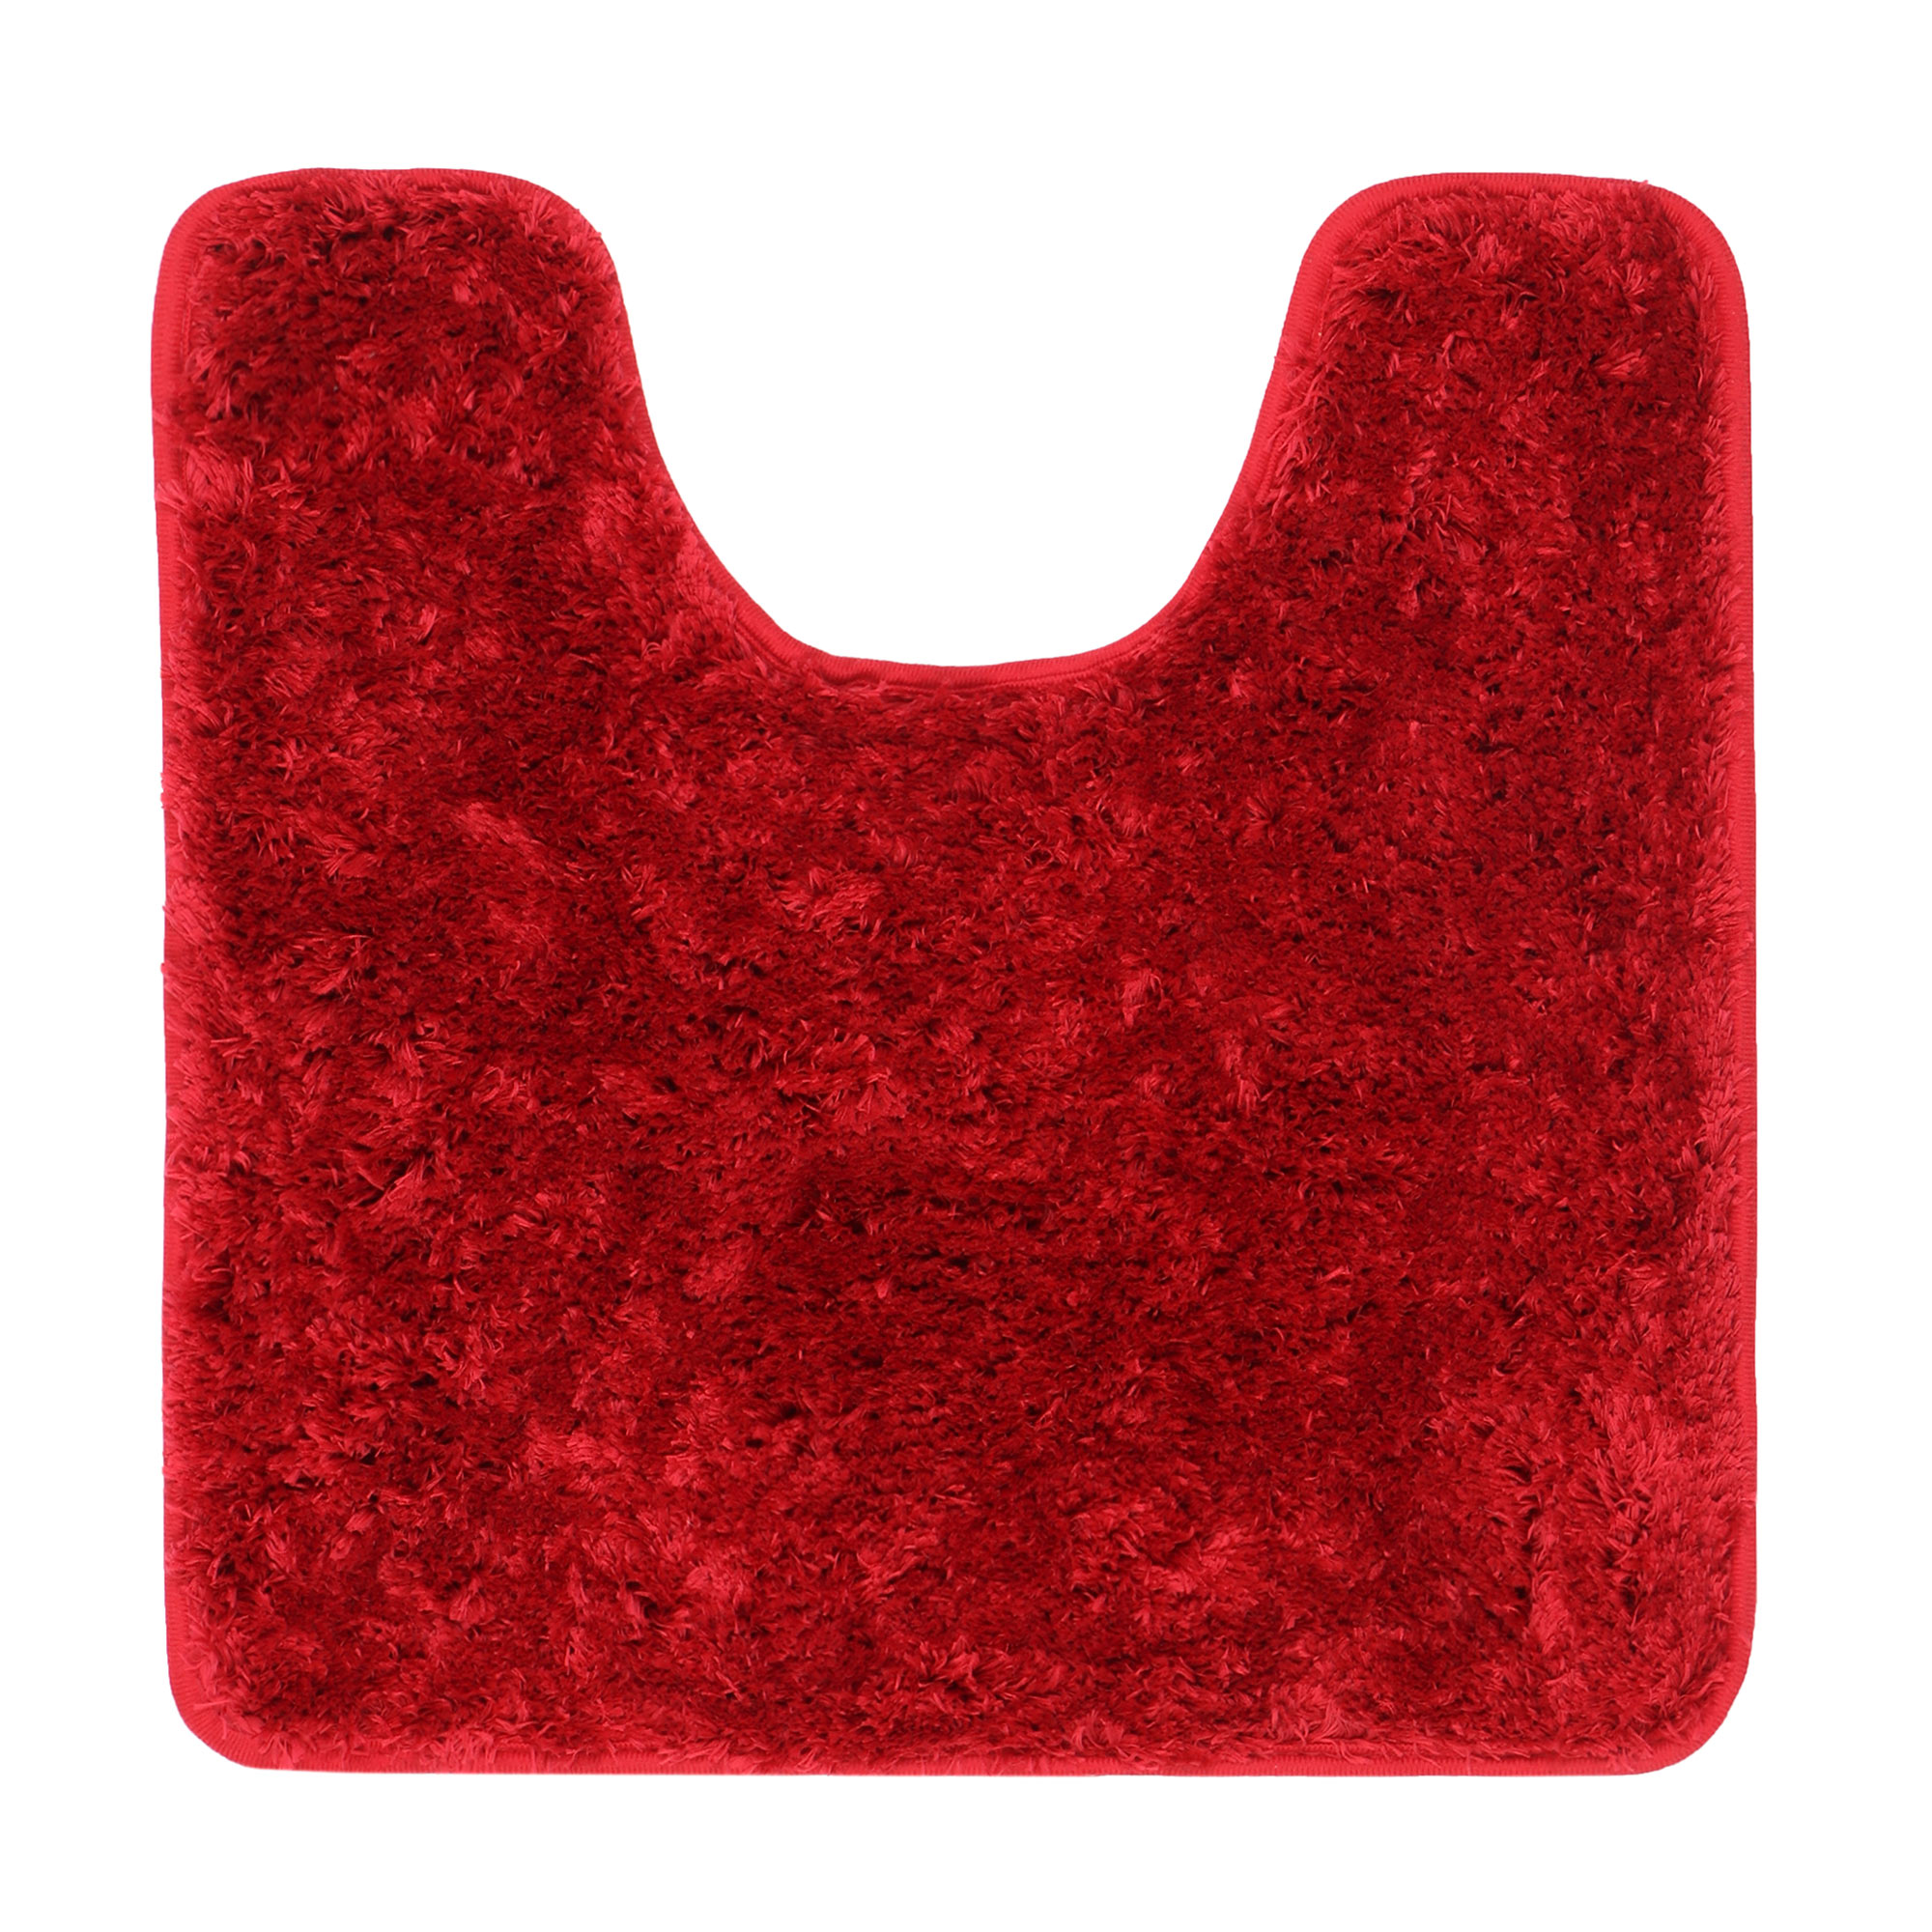 фото Коврик для туалета red coral 50х50 см красный